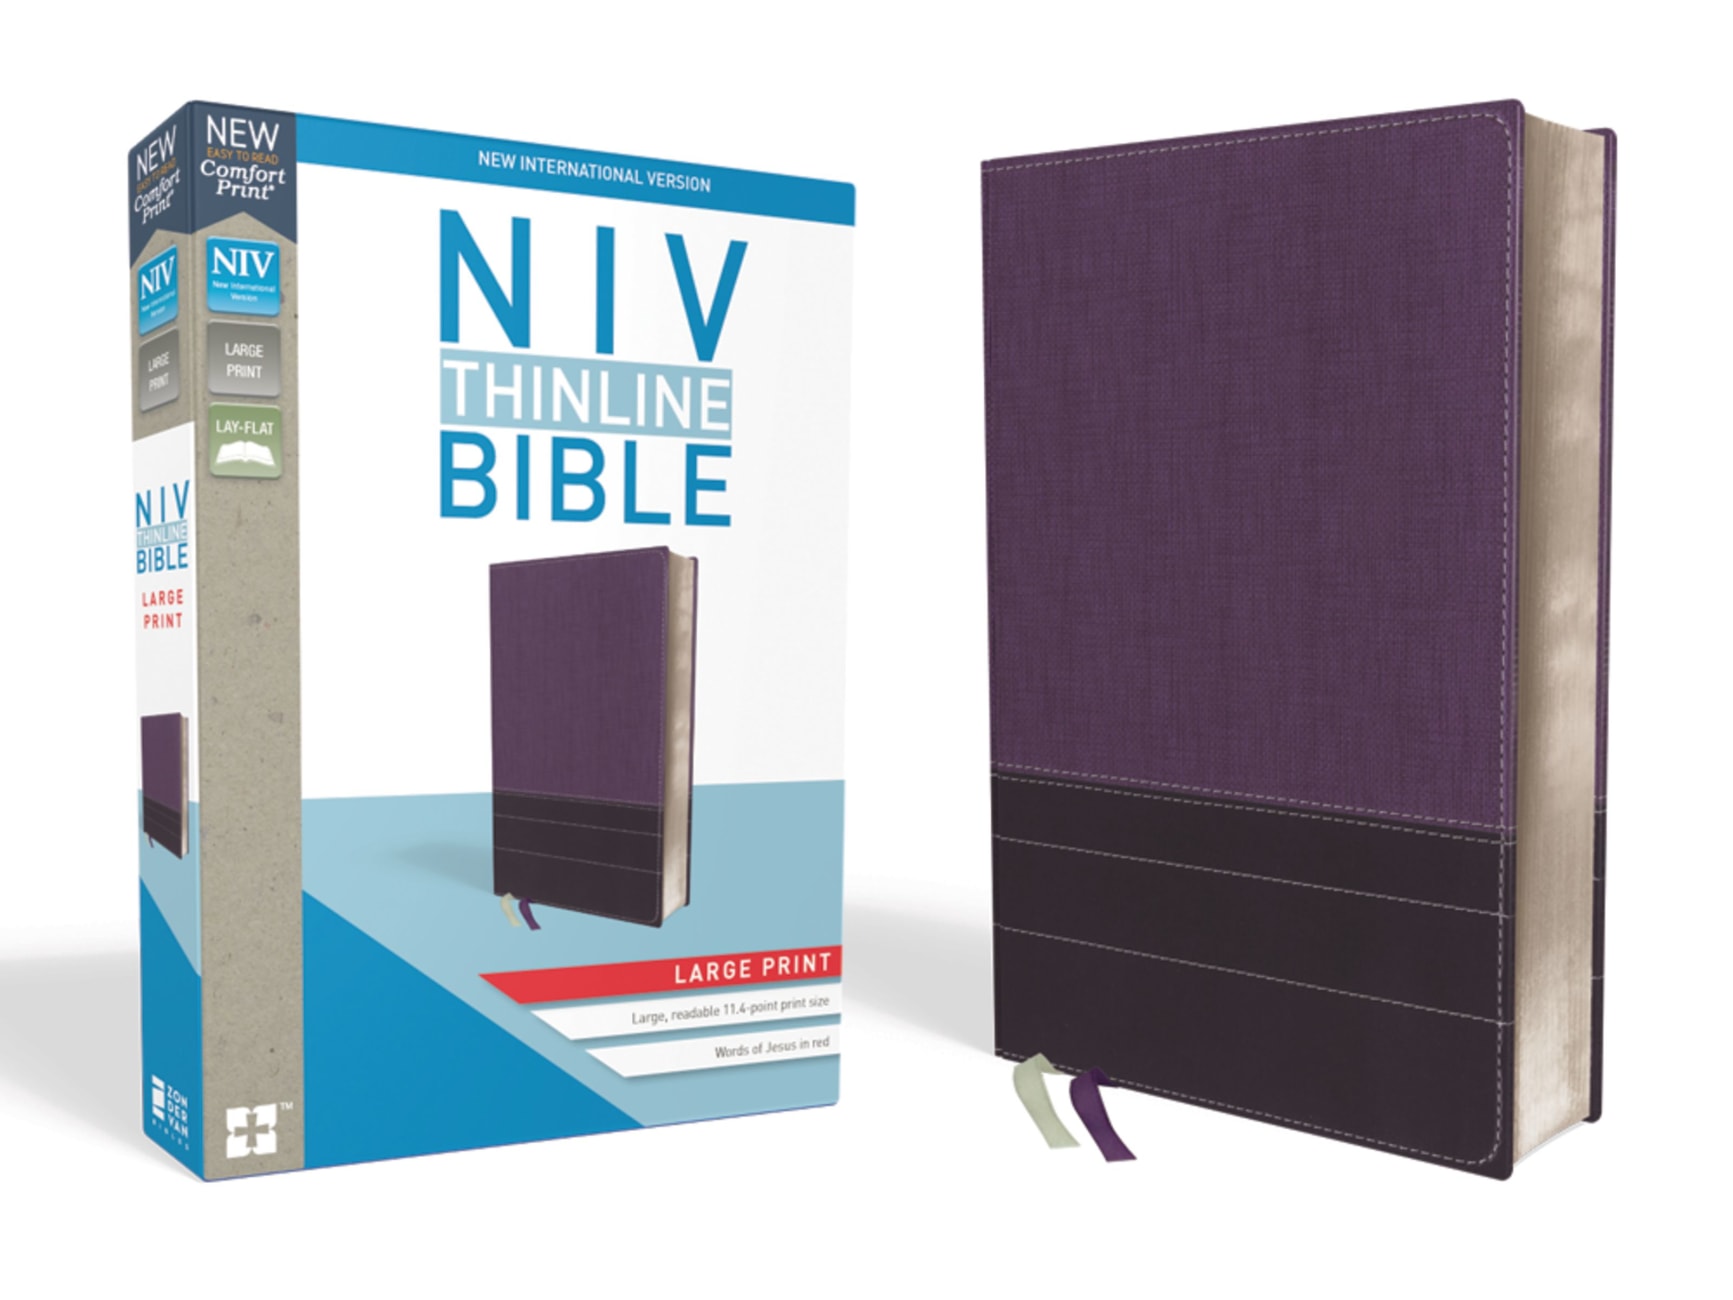 NIV Thinline Bible Large Print Purple (Red Letter Edition) Premium Imitation Leather